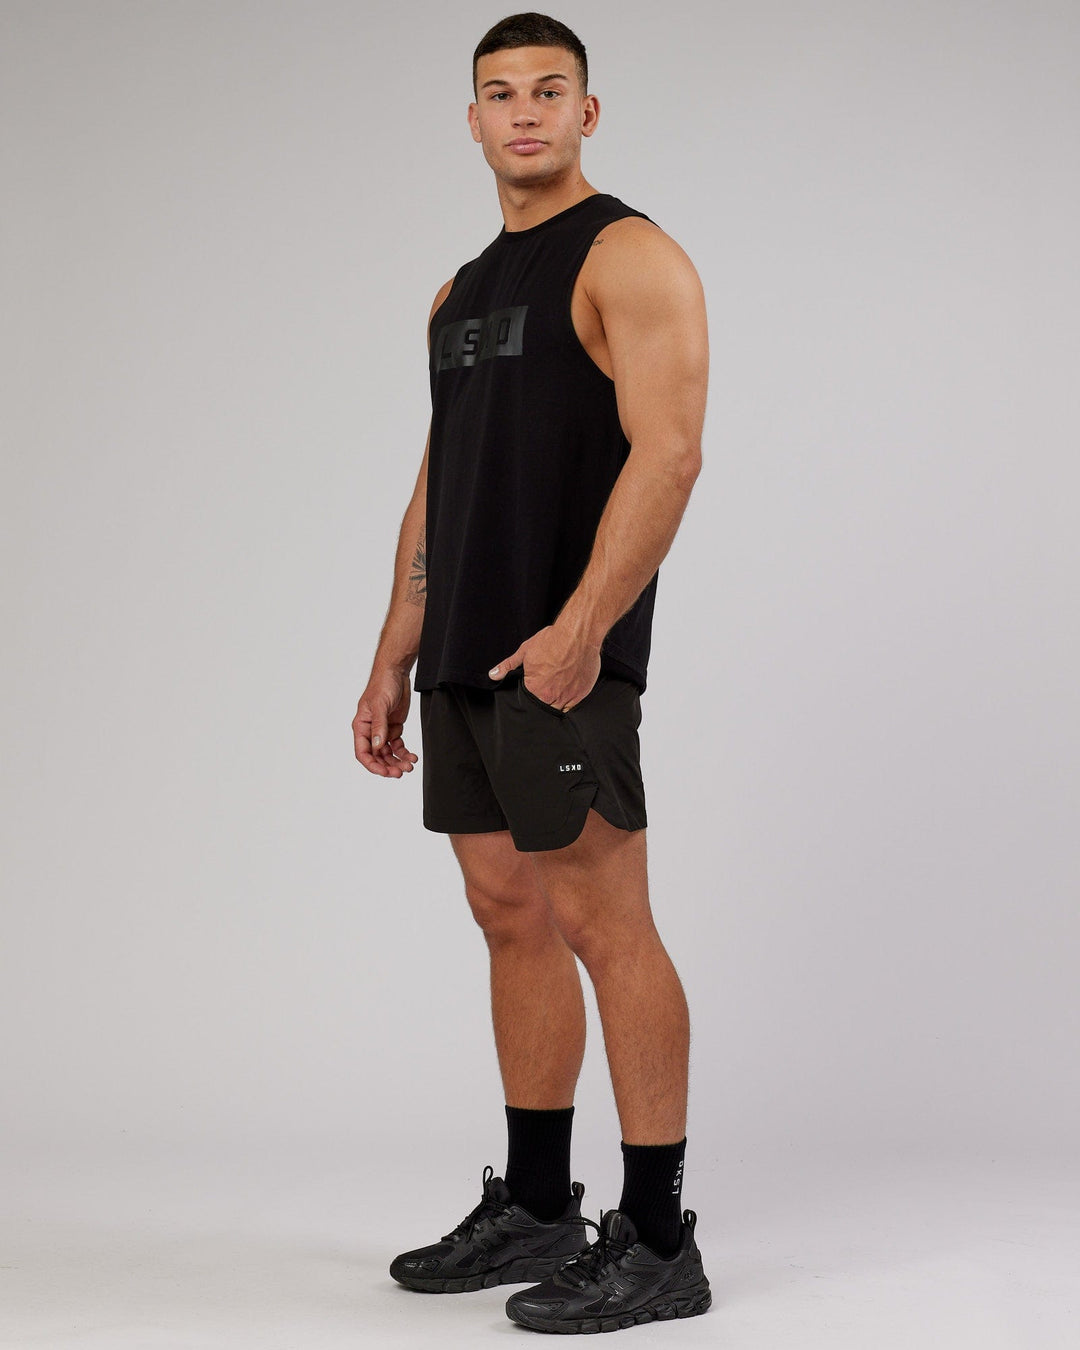 Man wearing Strength FLXCotton Training Fit Tank - Black-Black